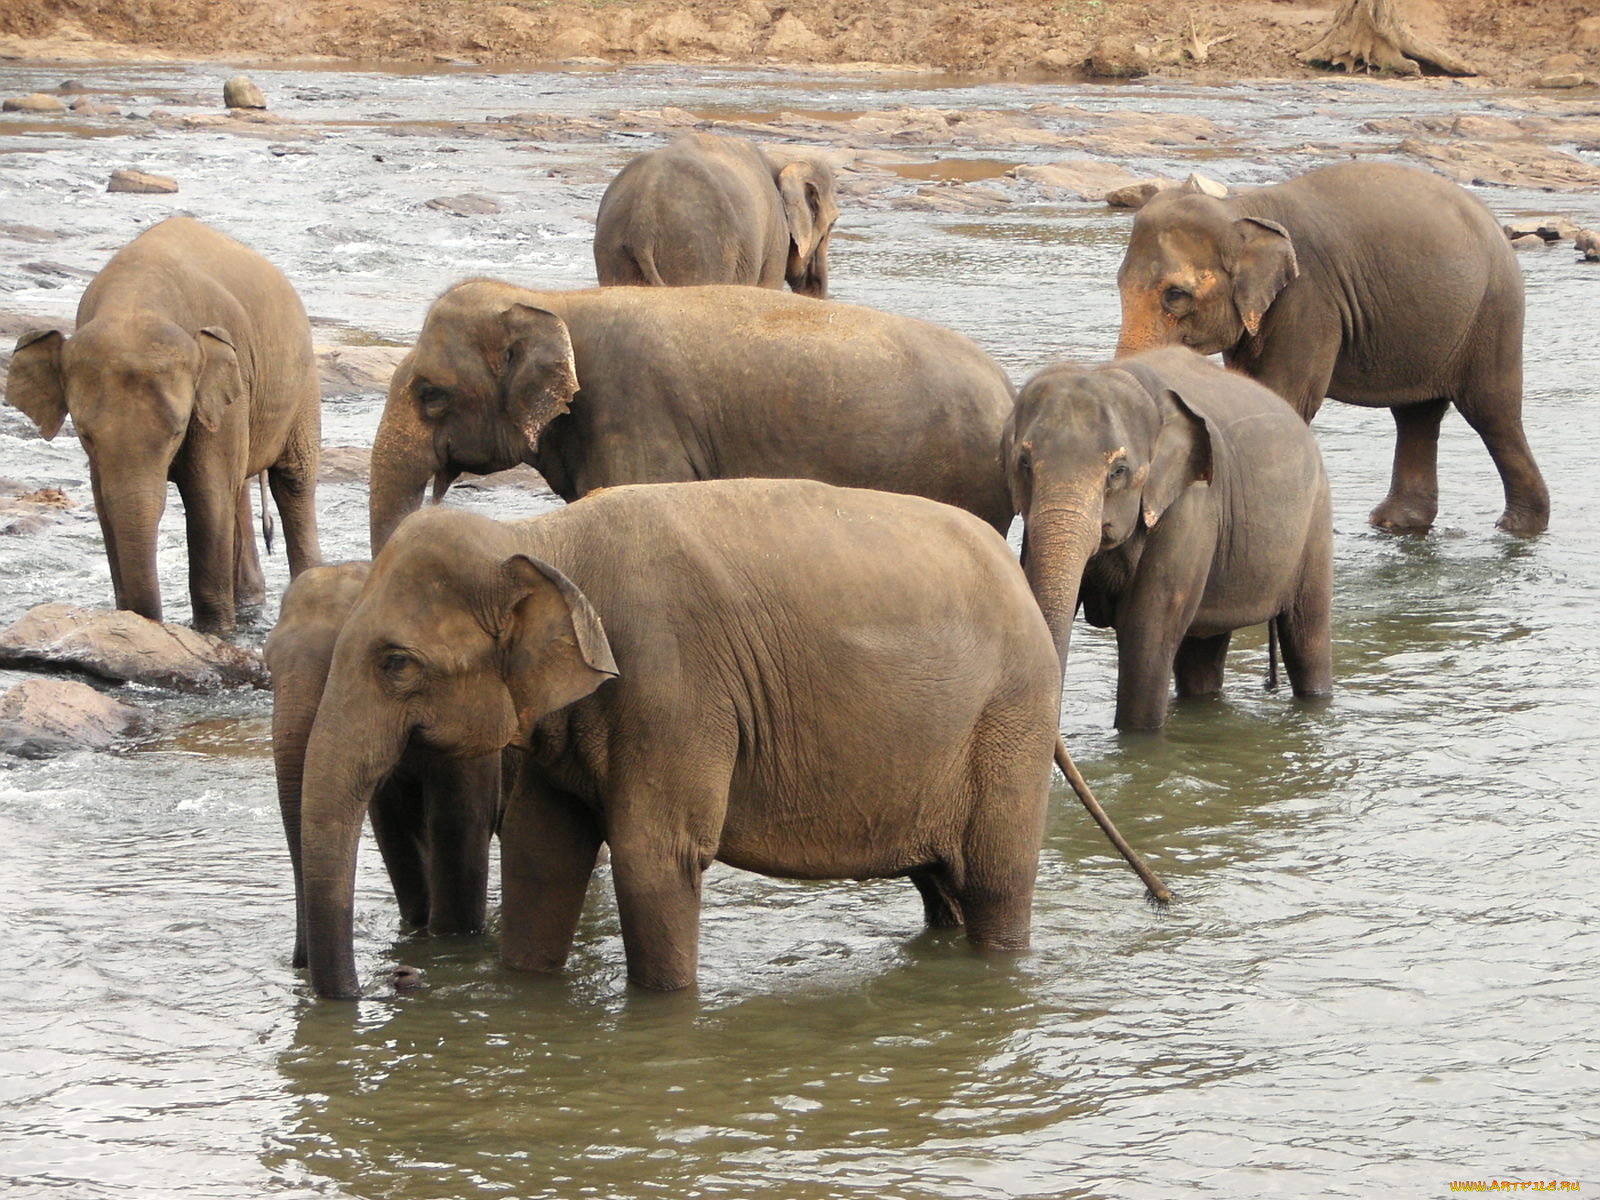 Elephant river. Слон река. Слоны в речке. Слон в речке. Слон рек рек.